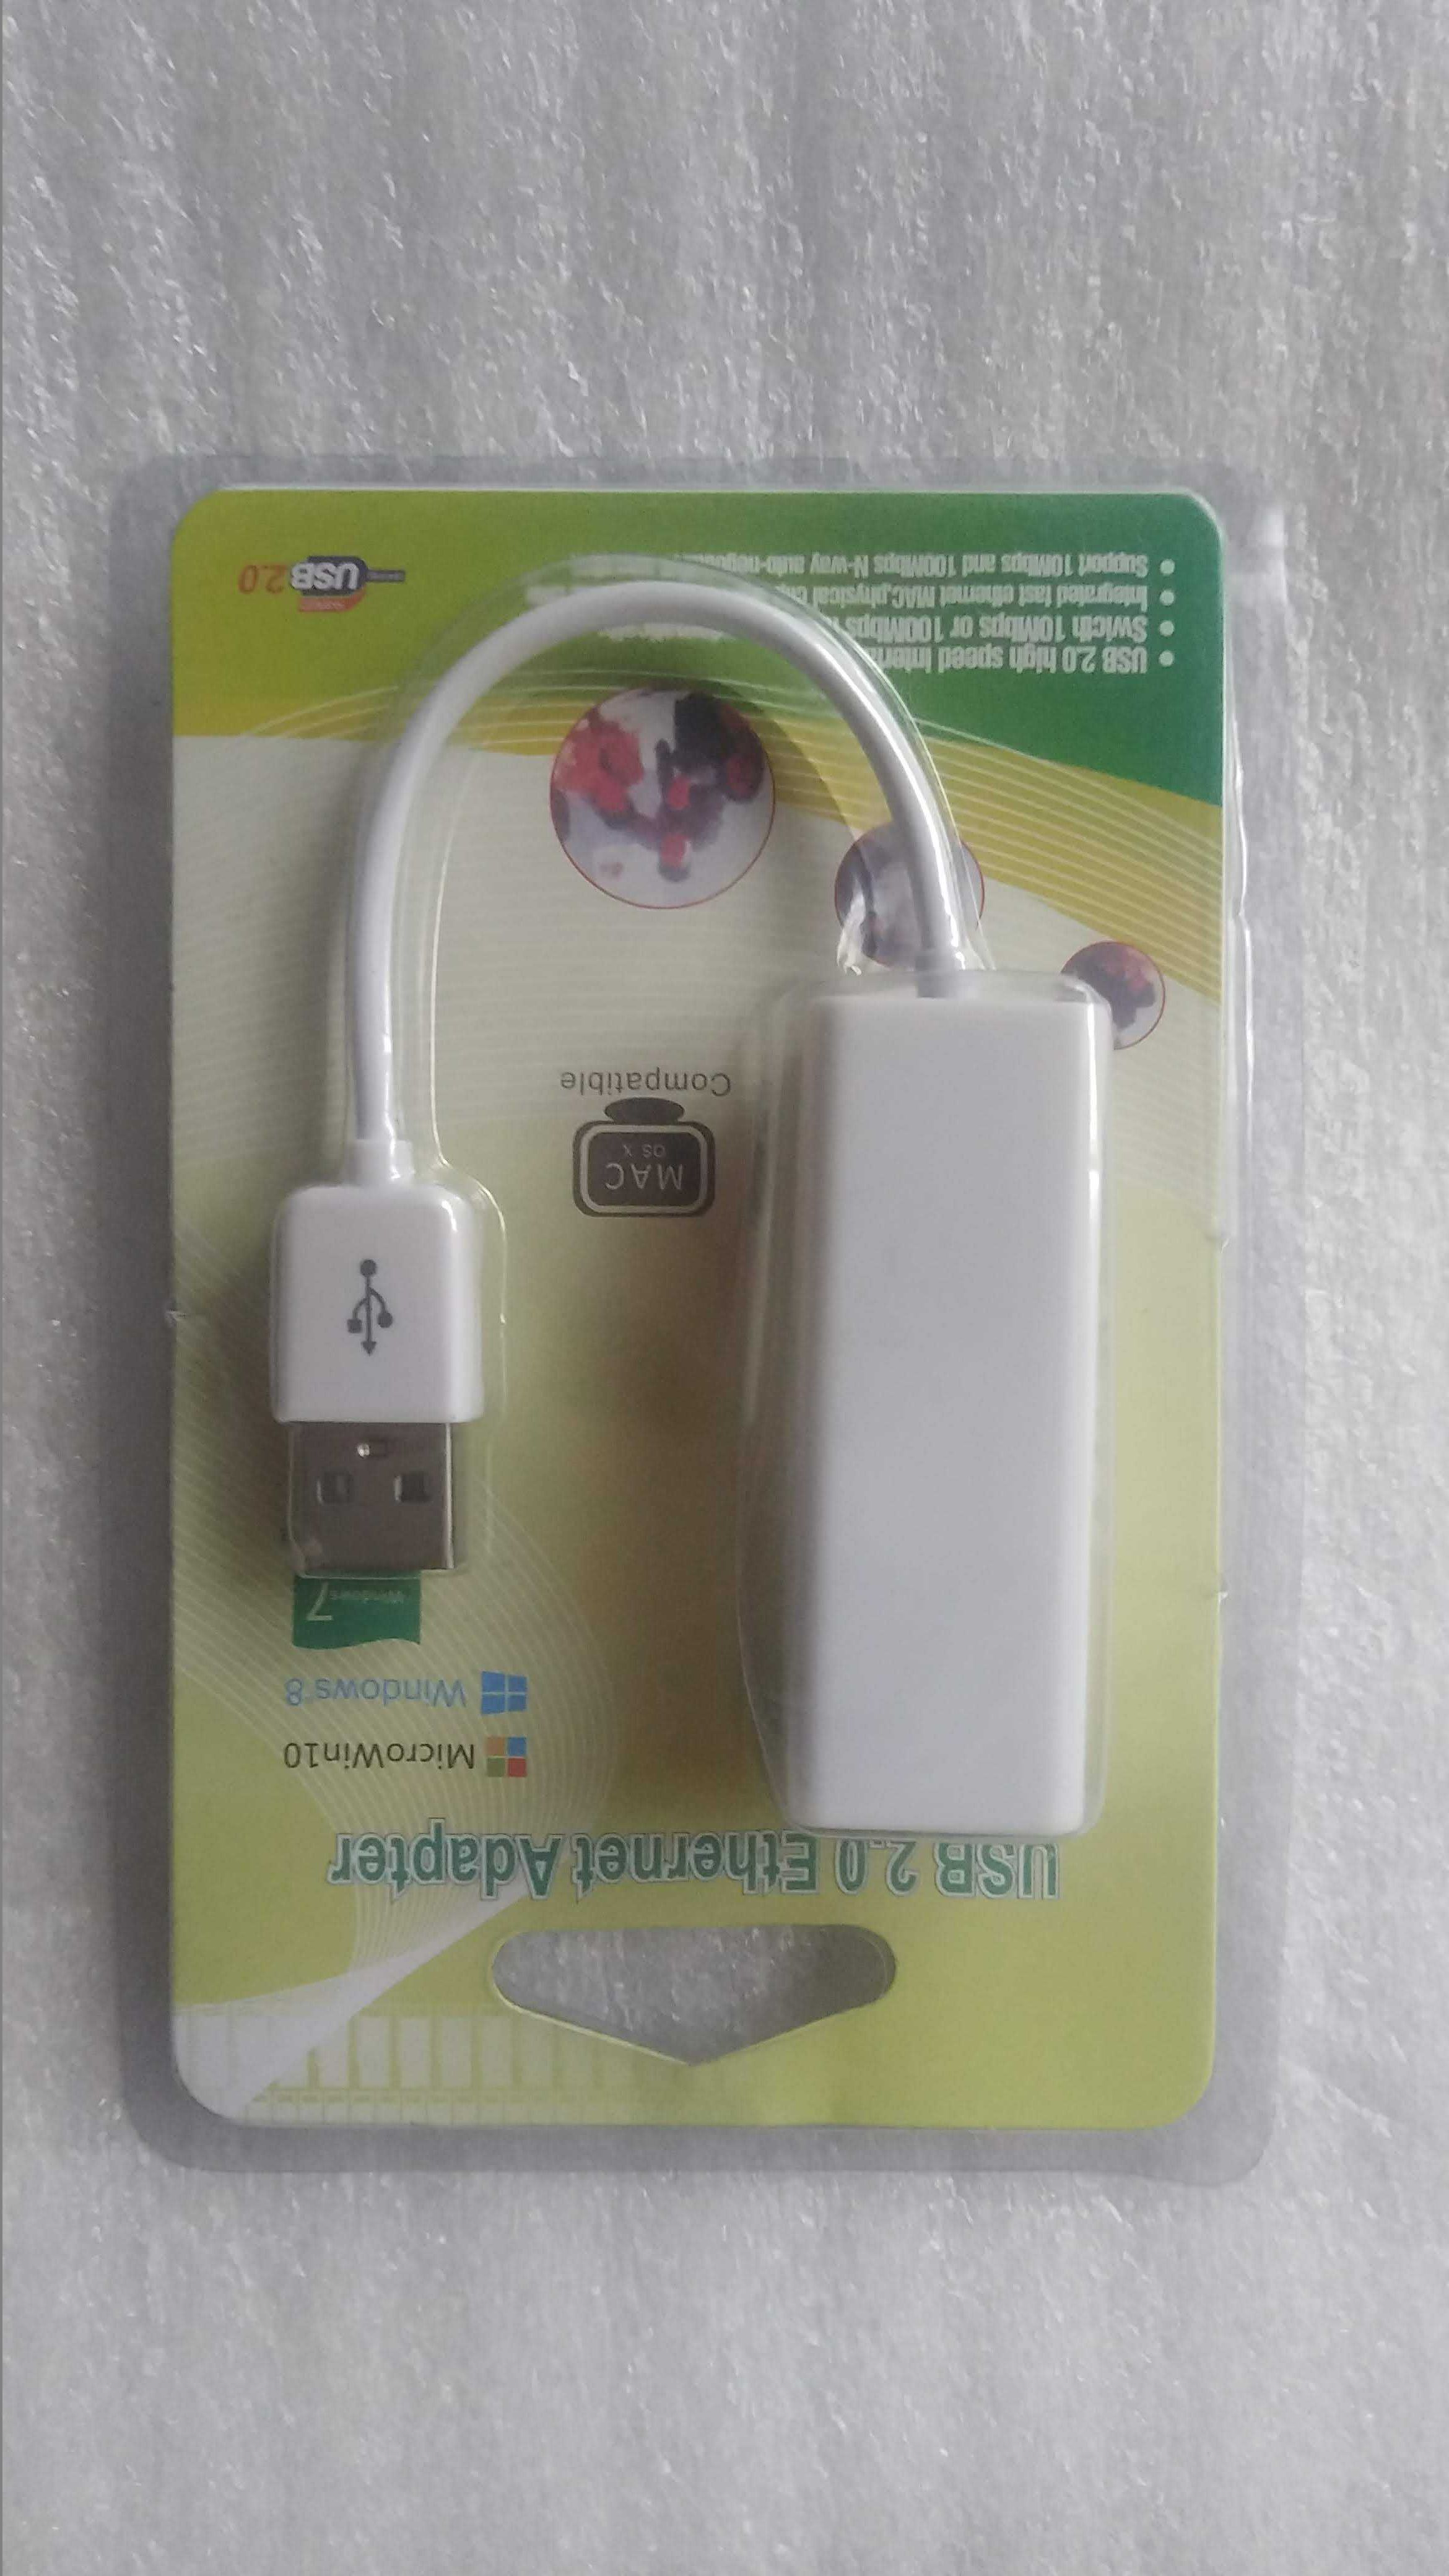 USB Audio Wі-Fі HUB Ethernet